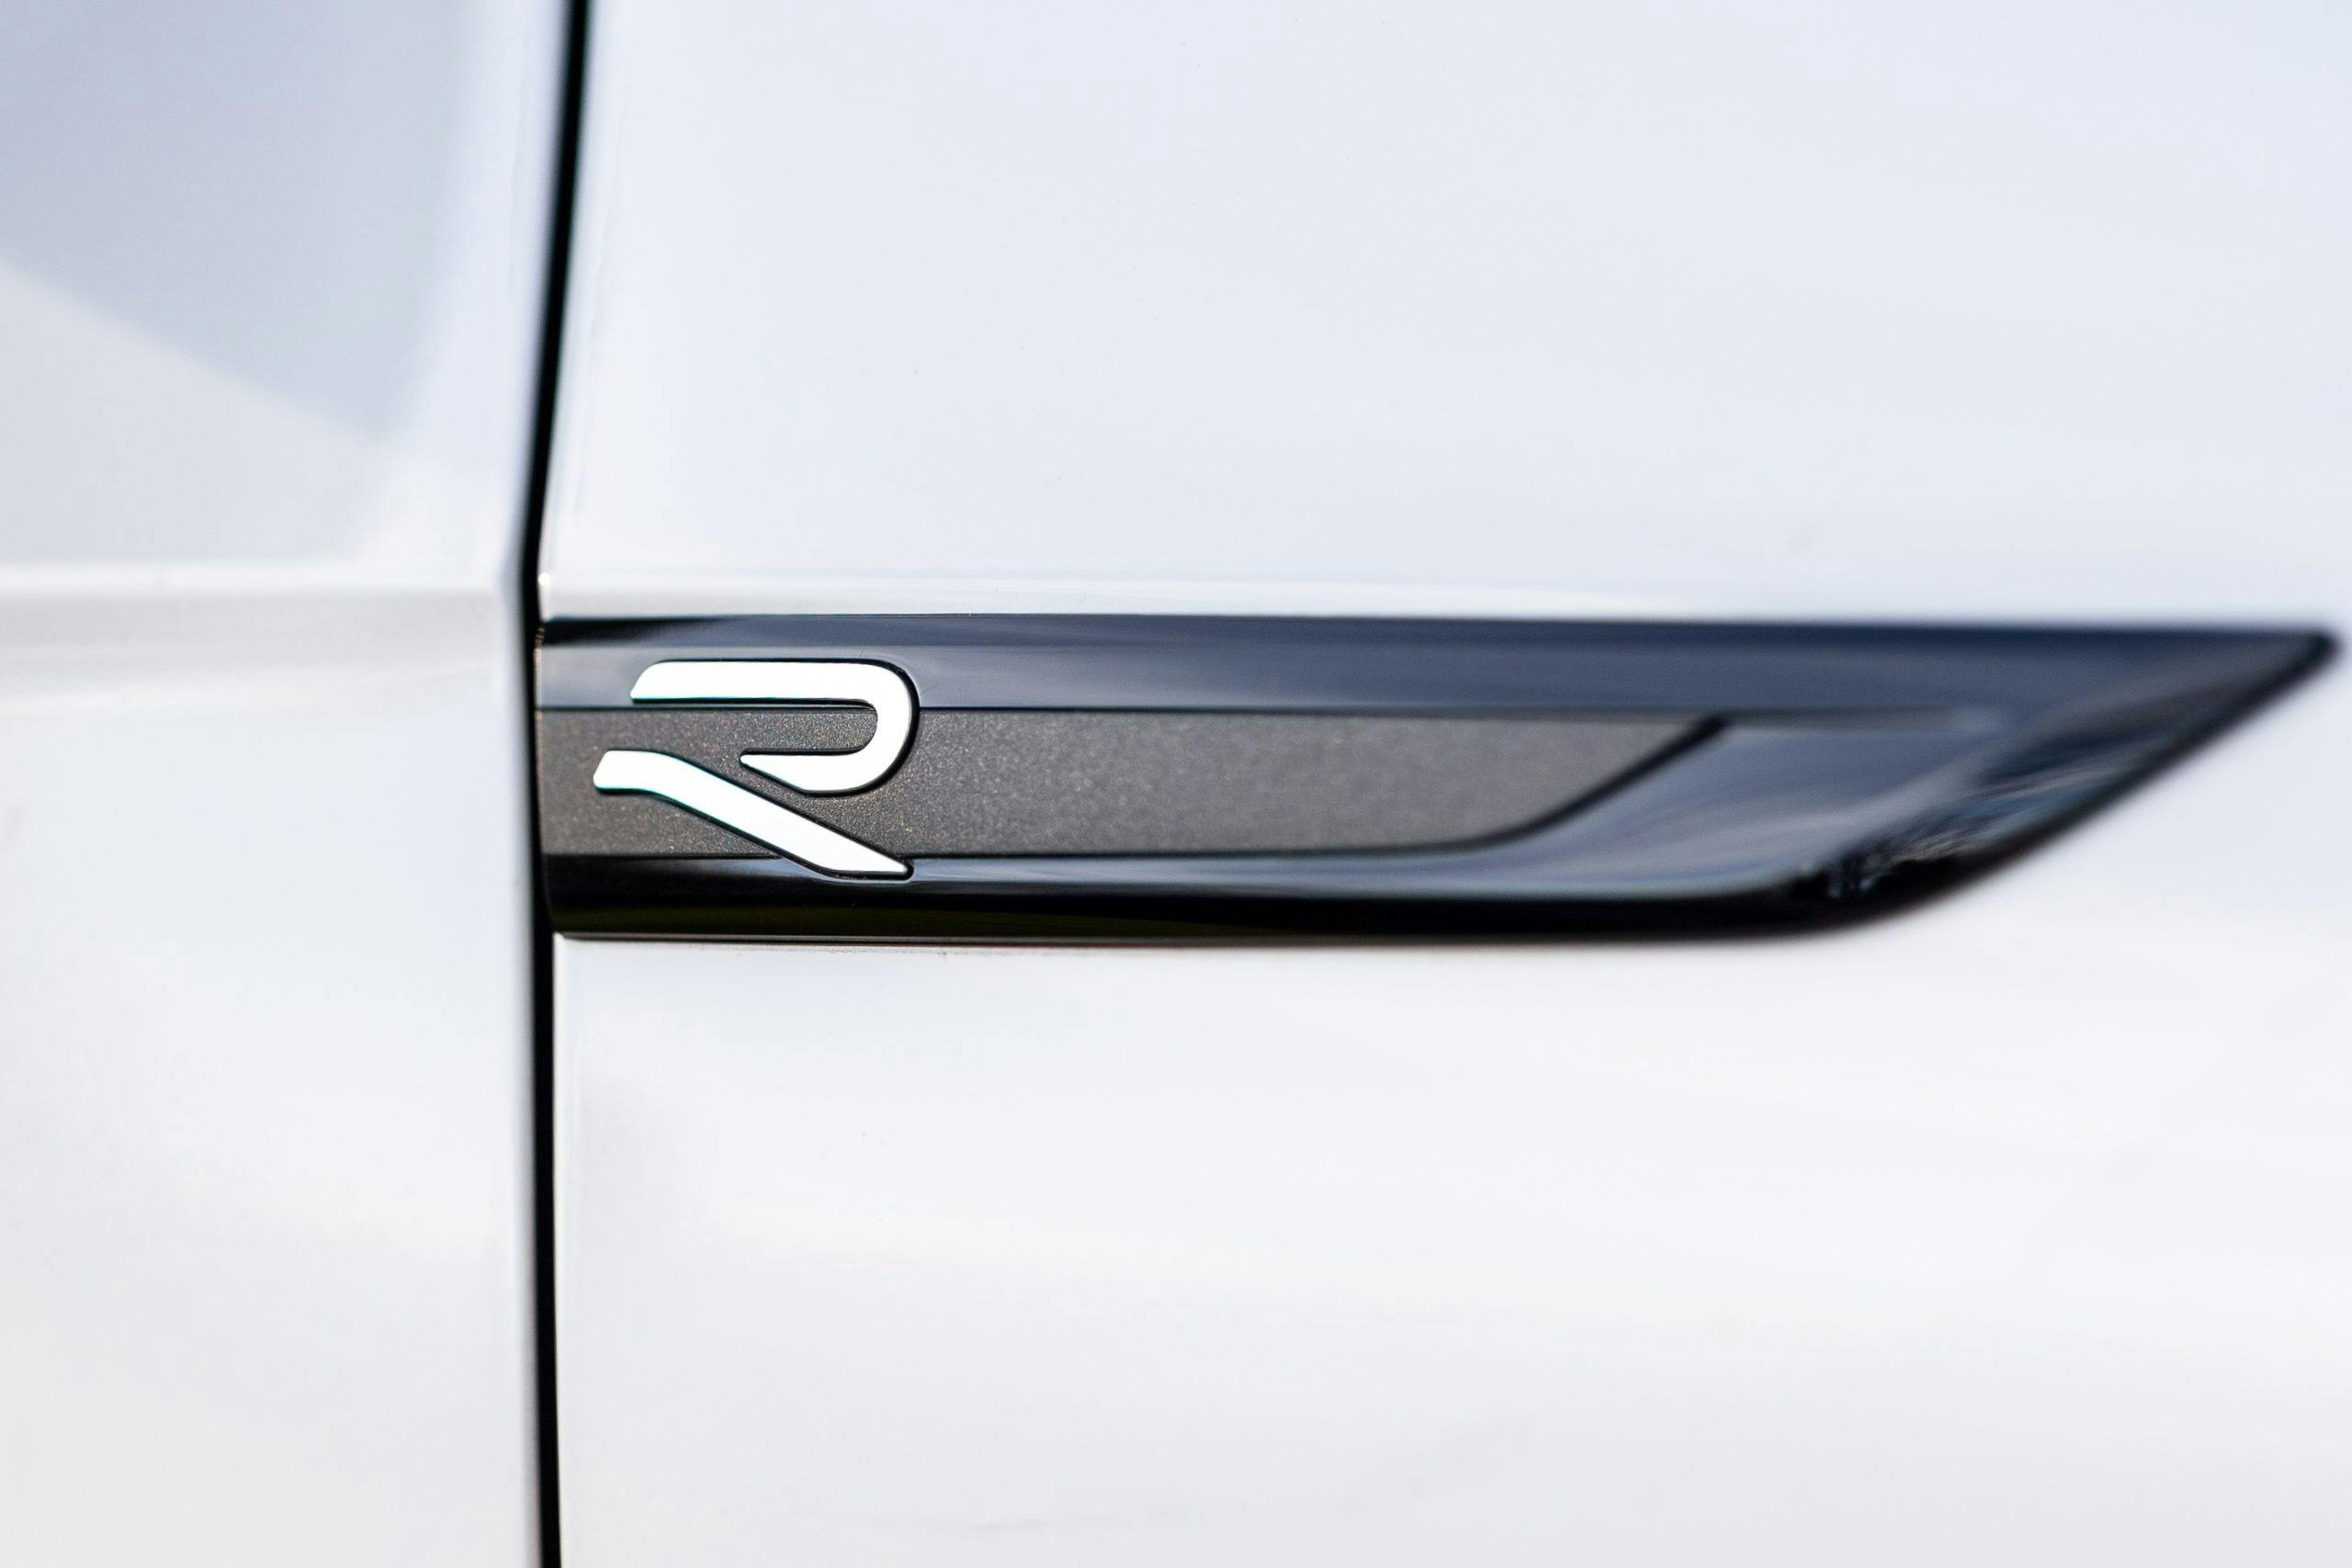 VW Golf R badge styling detail